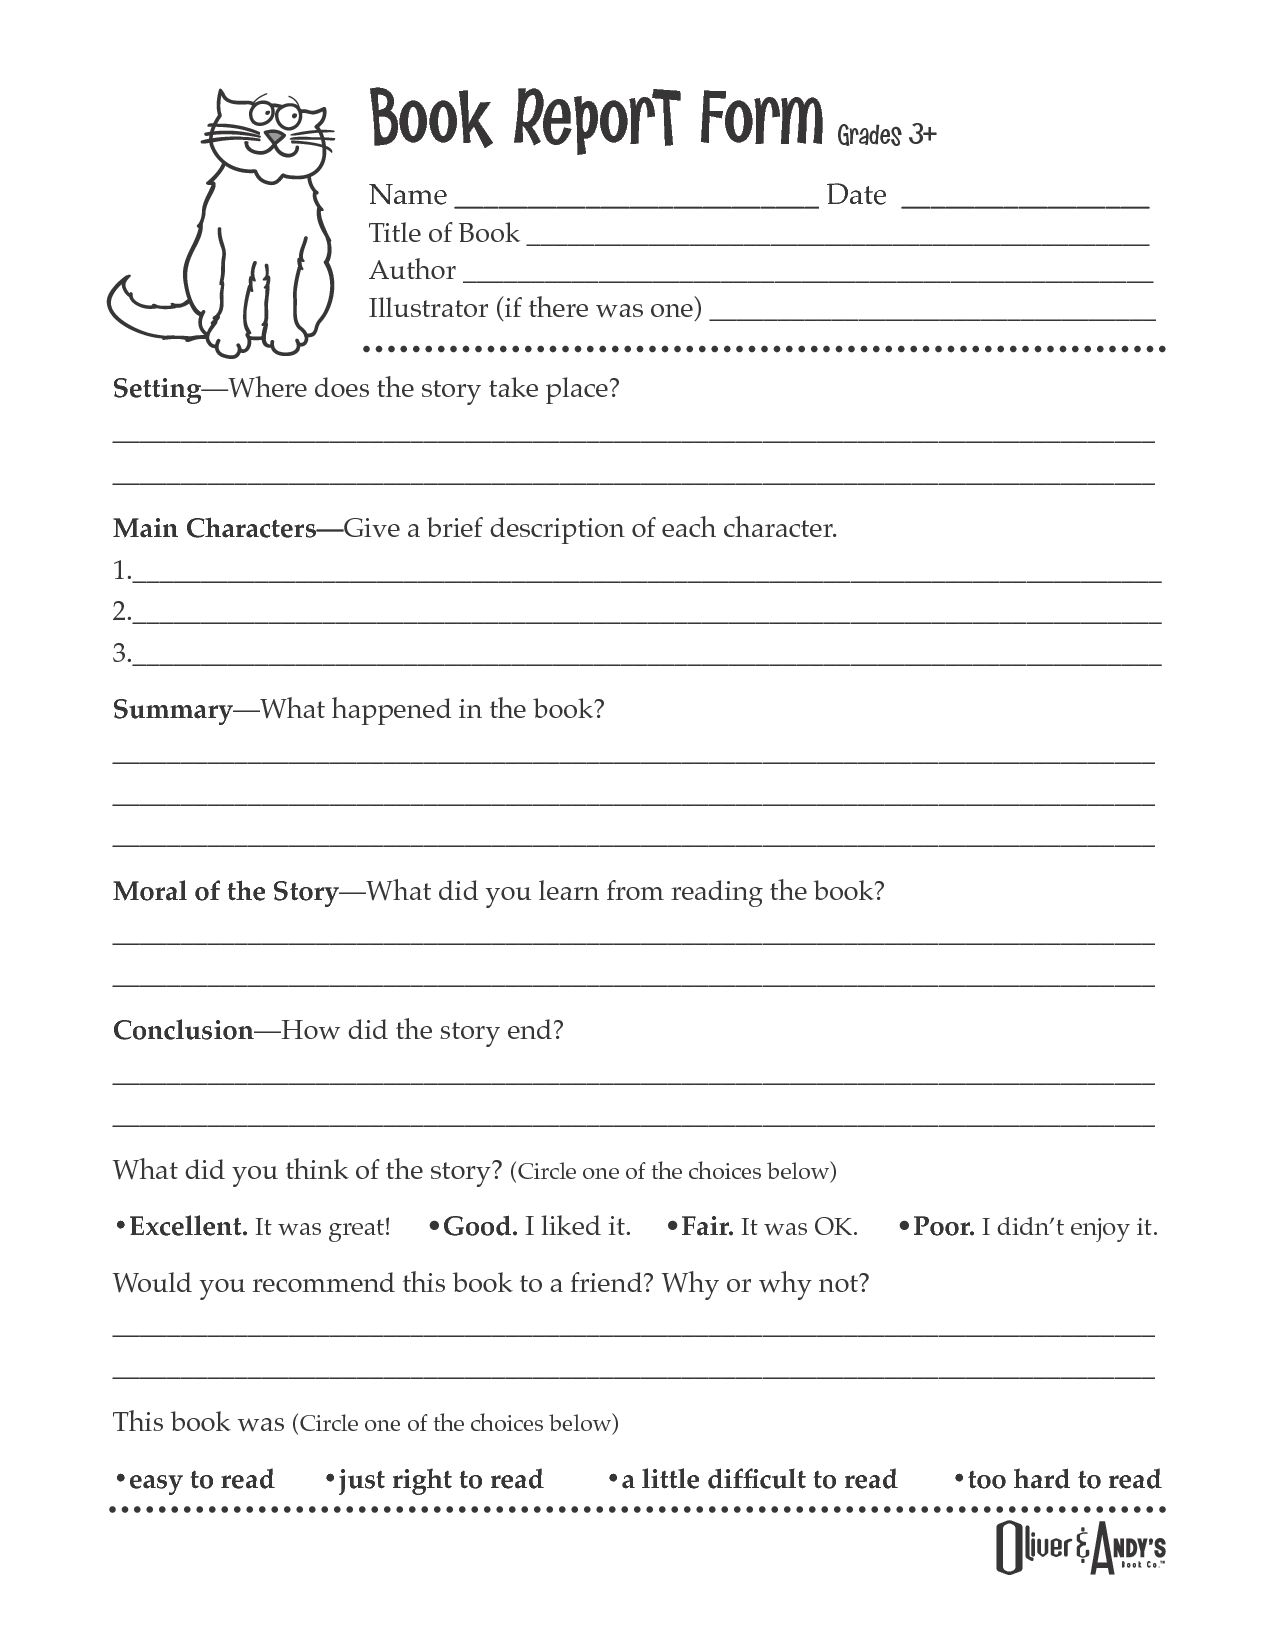 Second Grade Book Report Template | Book Report Form Grades In Biography Book Report Template